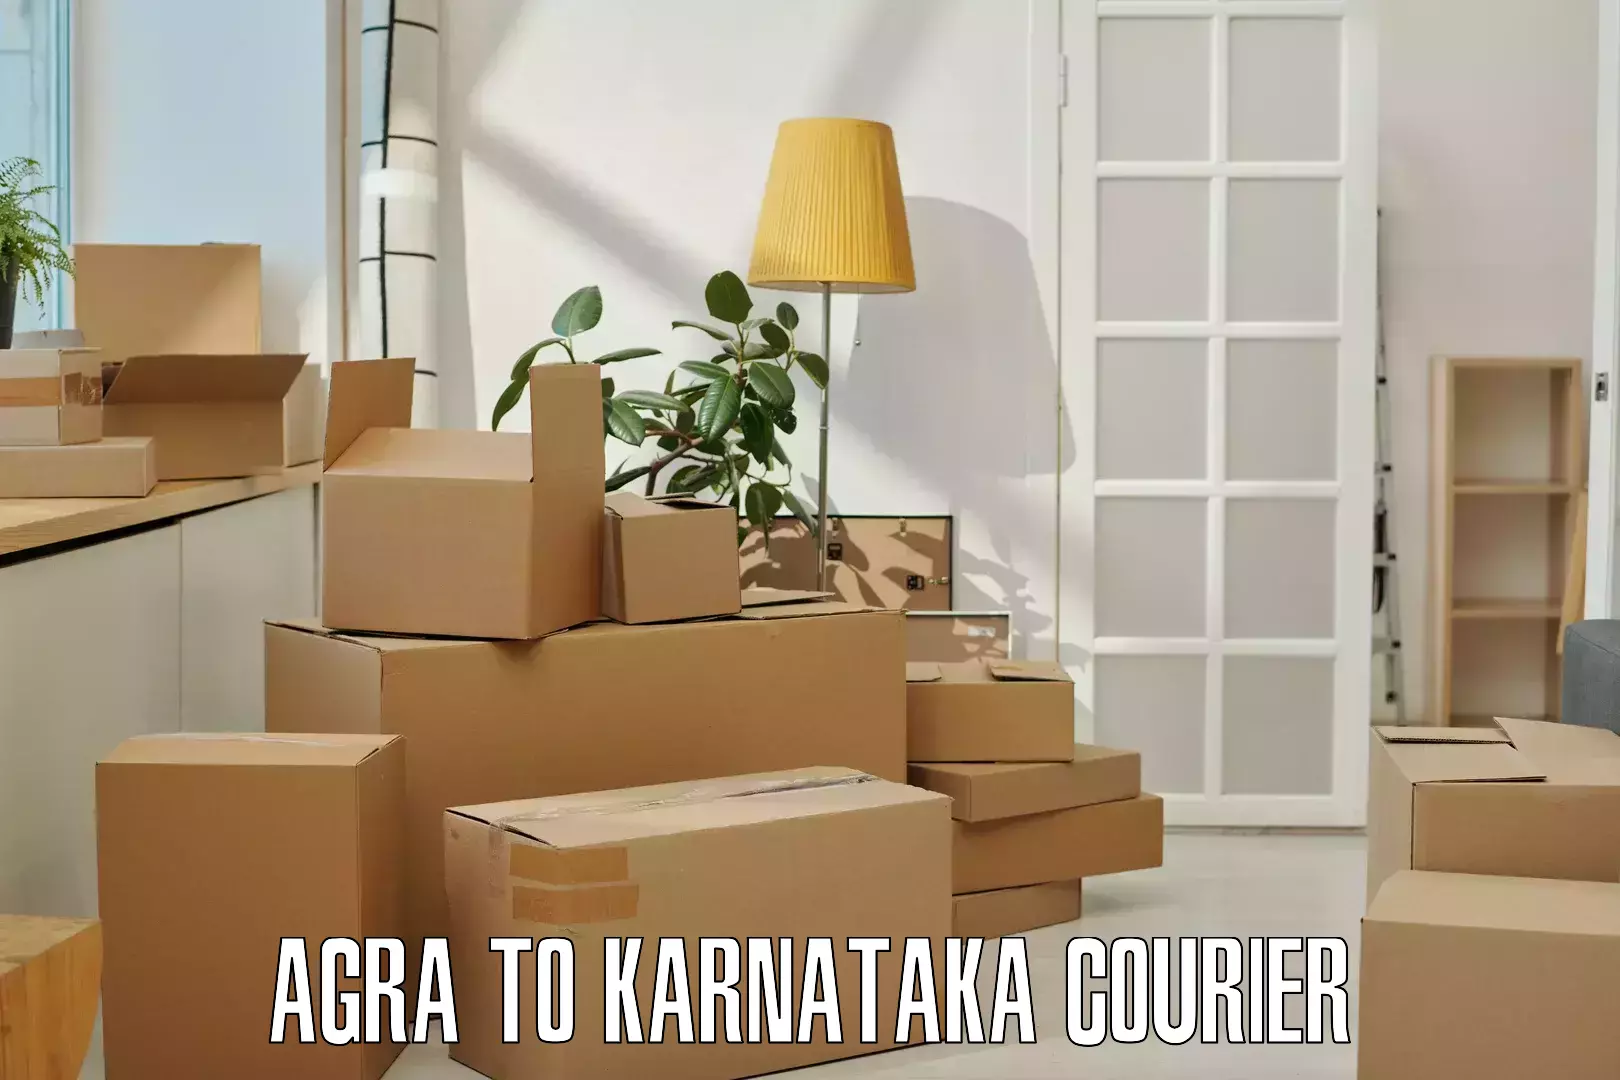 Advanced delivery network Agra to Karnataka